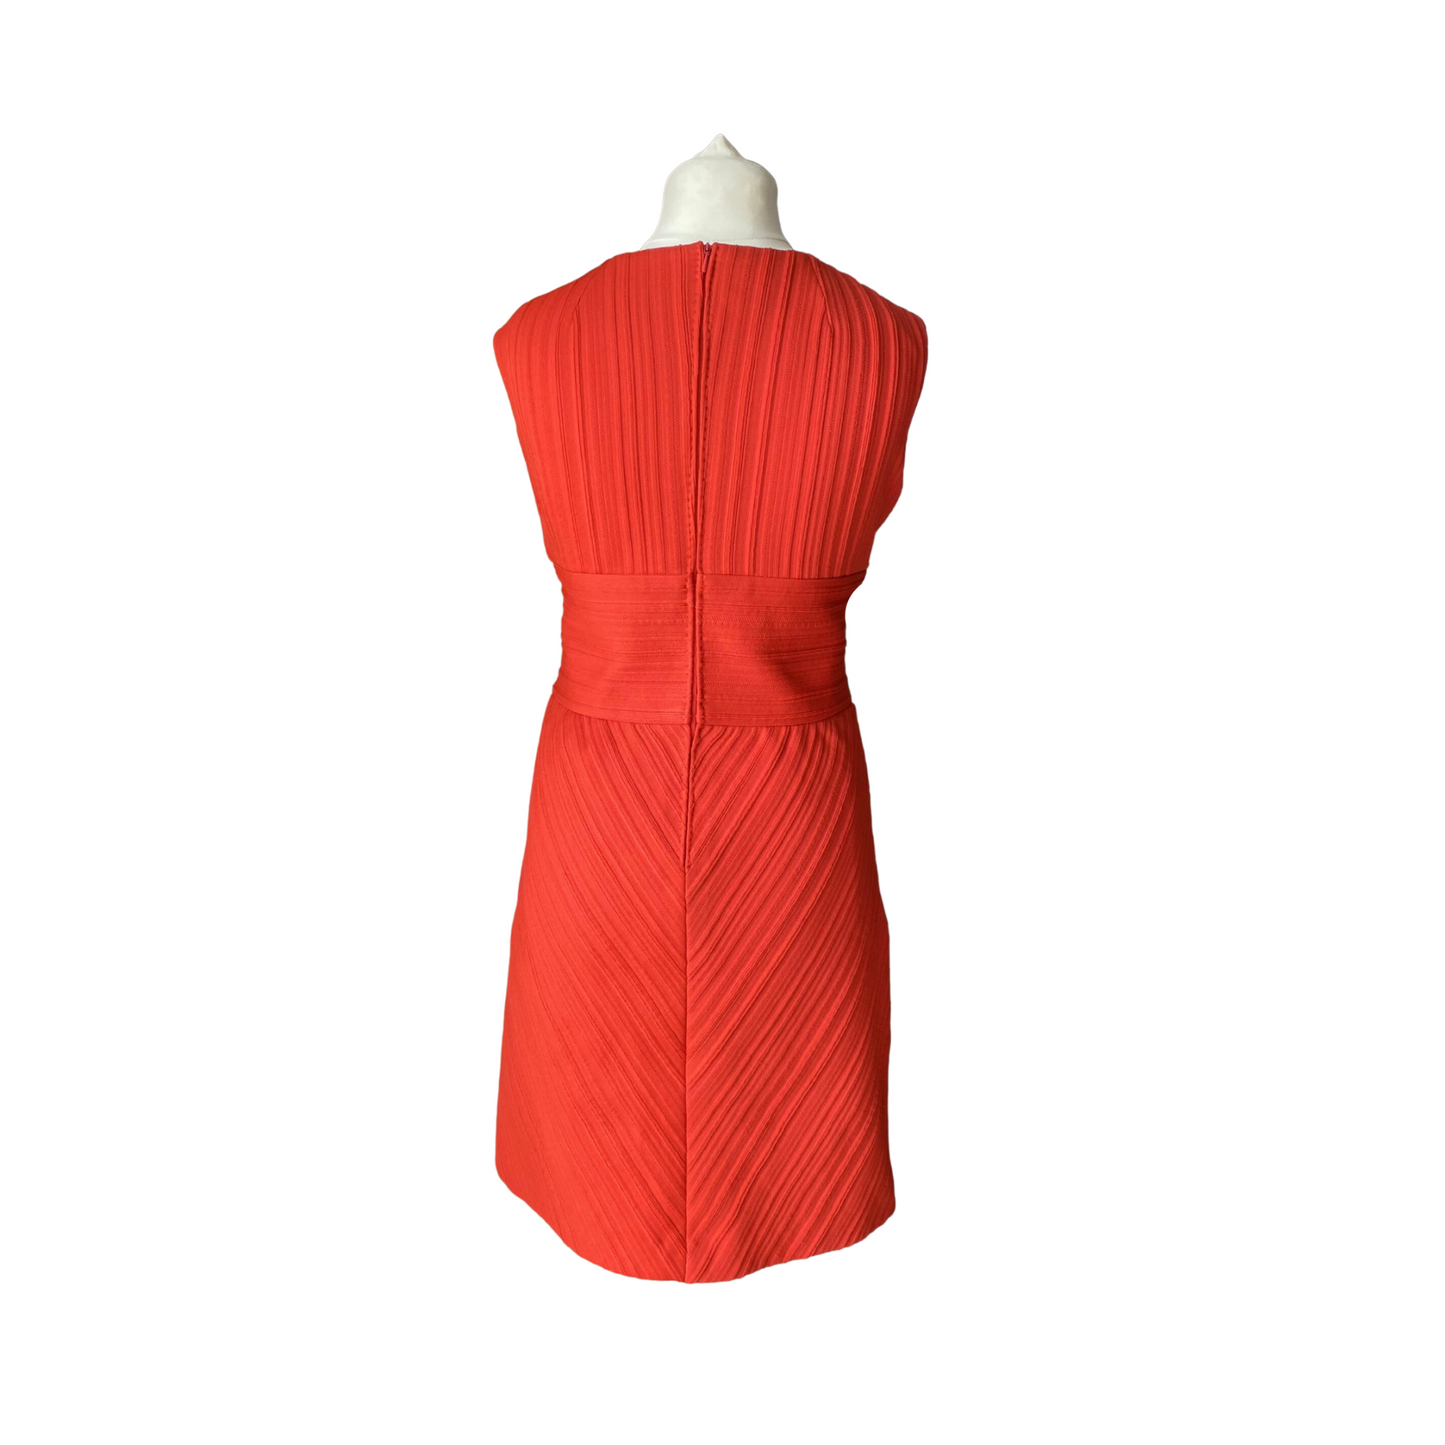 60s sleeveless red/ orange dress.  Approx UK size 14